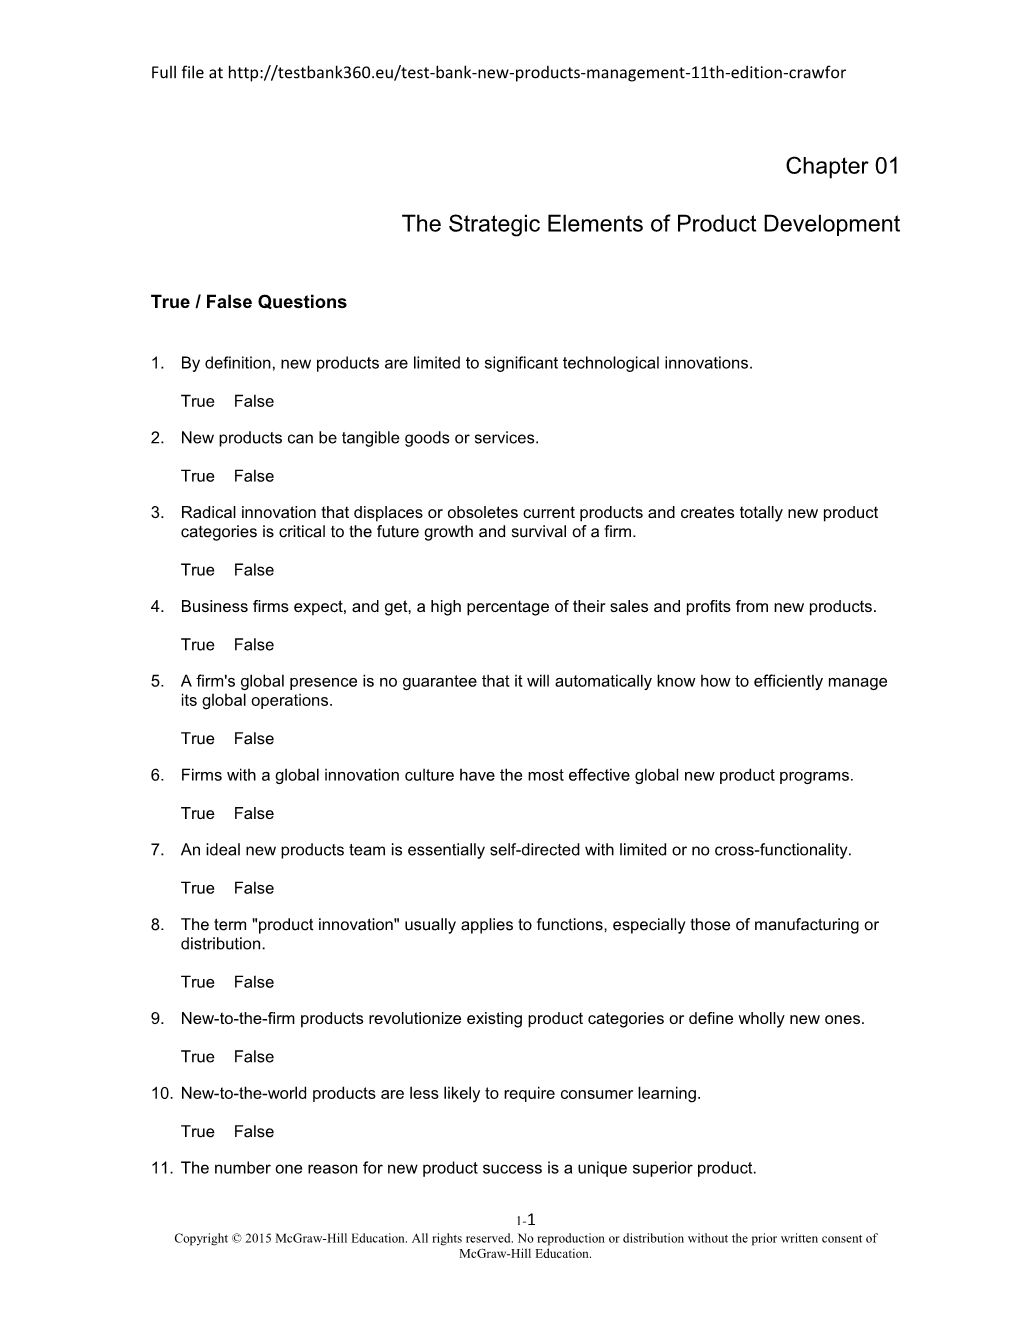 The Strategic Elements of Product Development